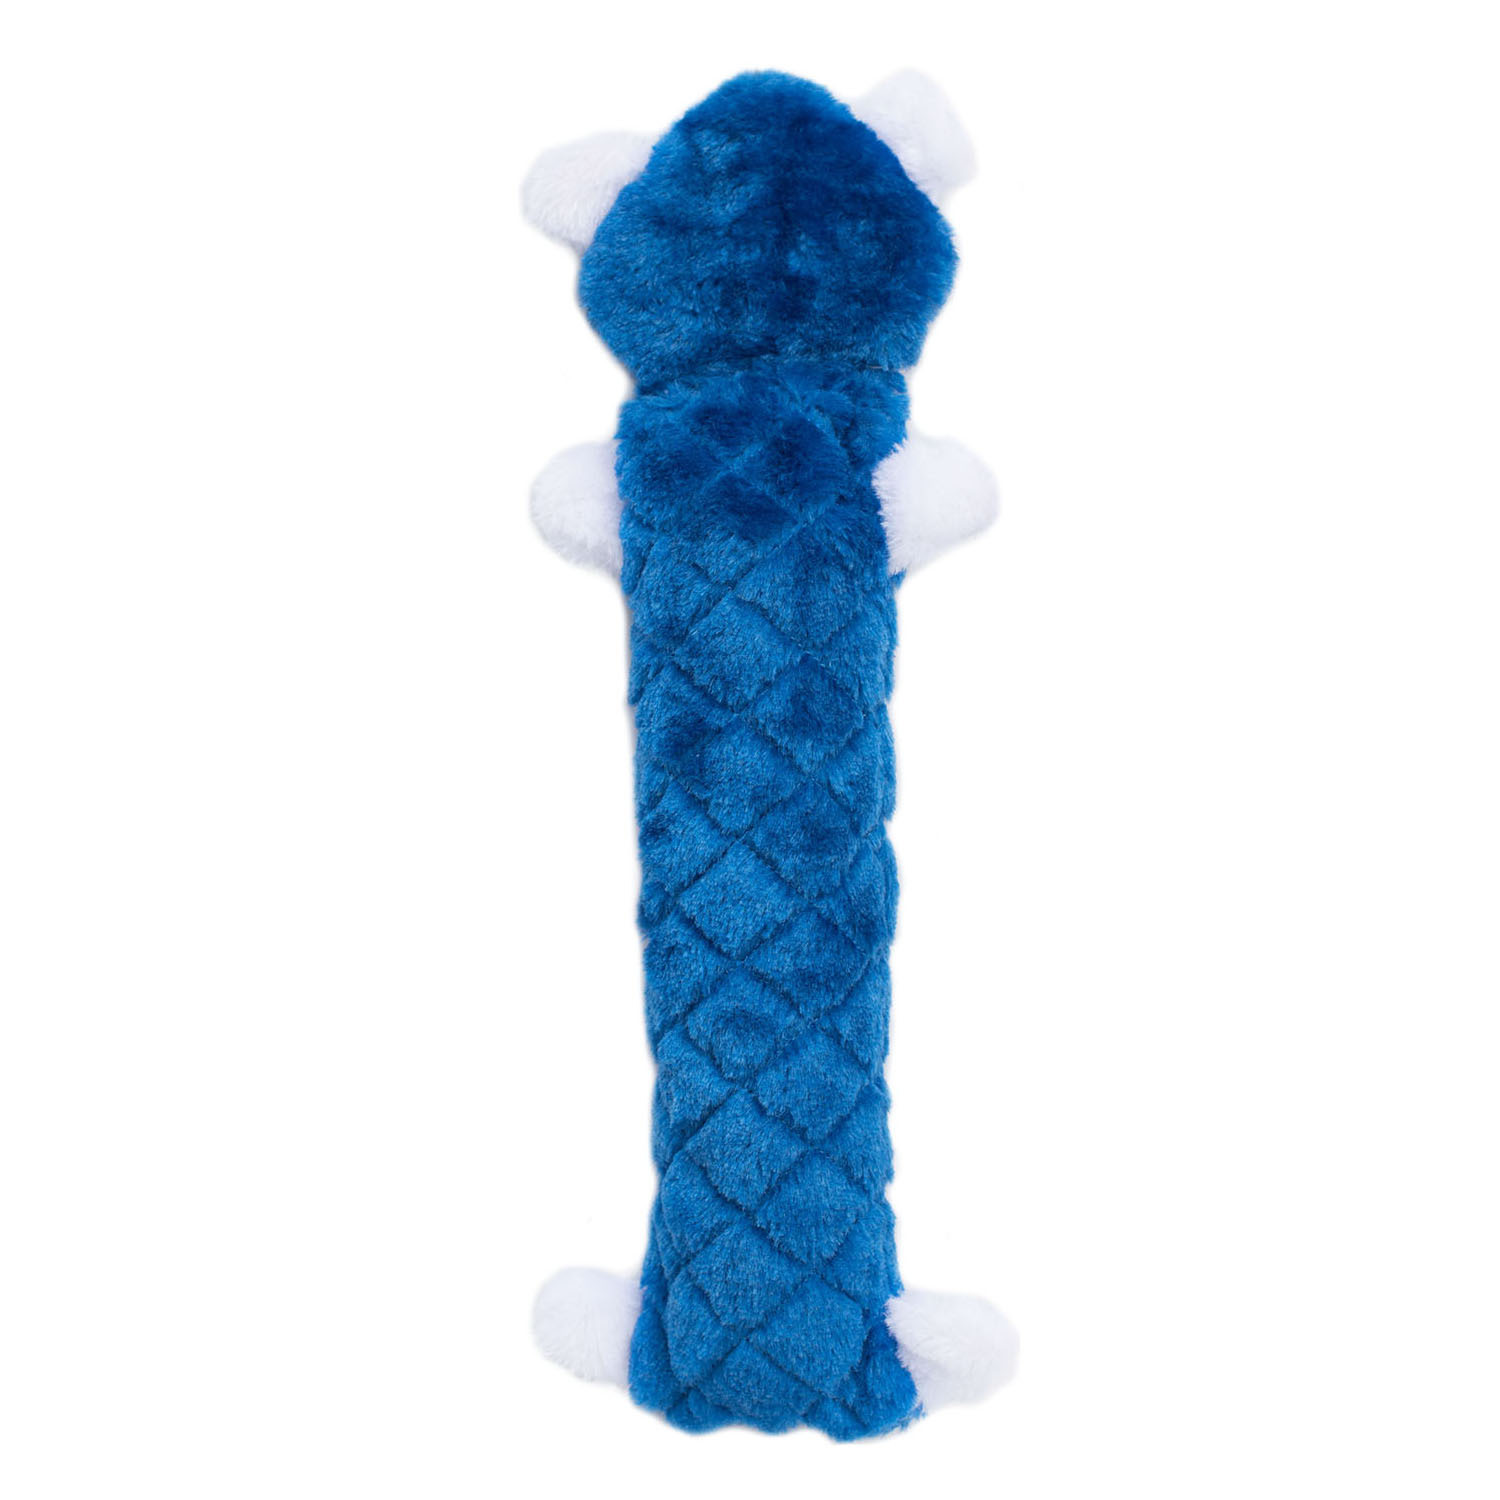 Zippy Paws Plush Squeaker Dog Toy - Hanukkah Jigglerz - Blue Bear image 0